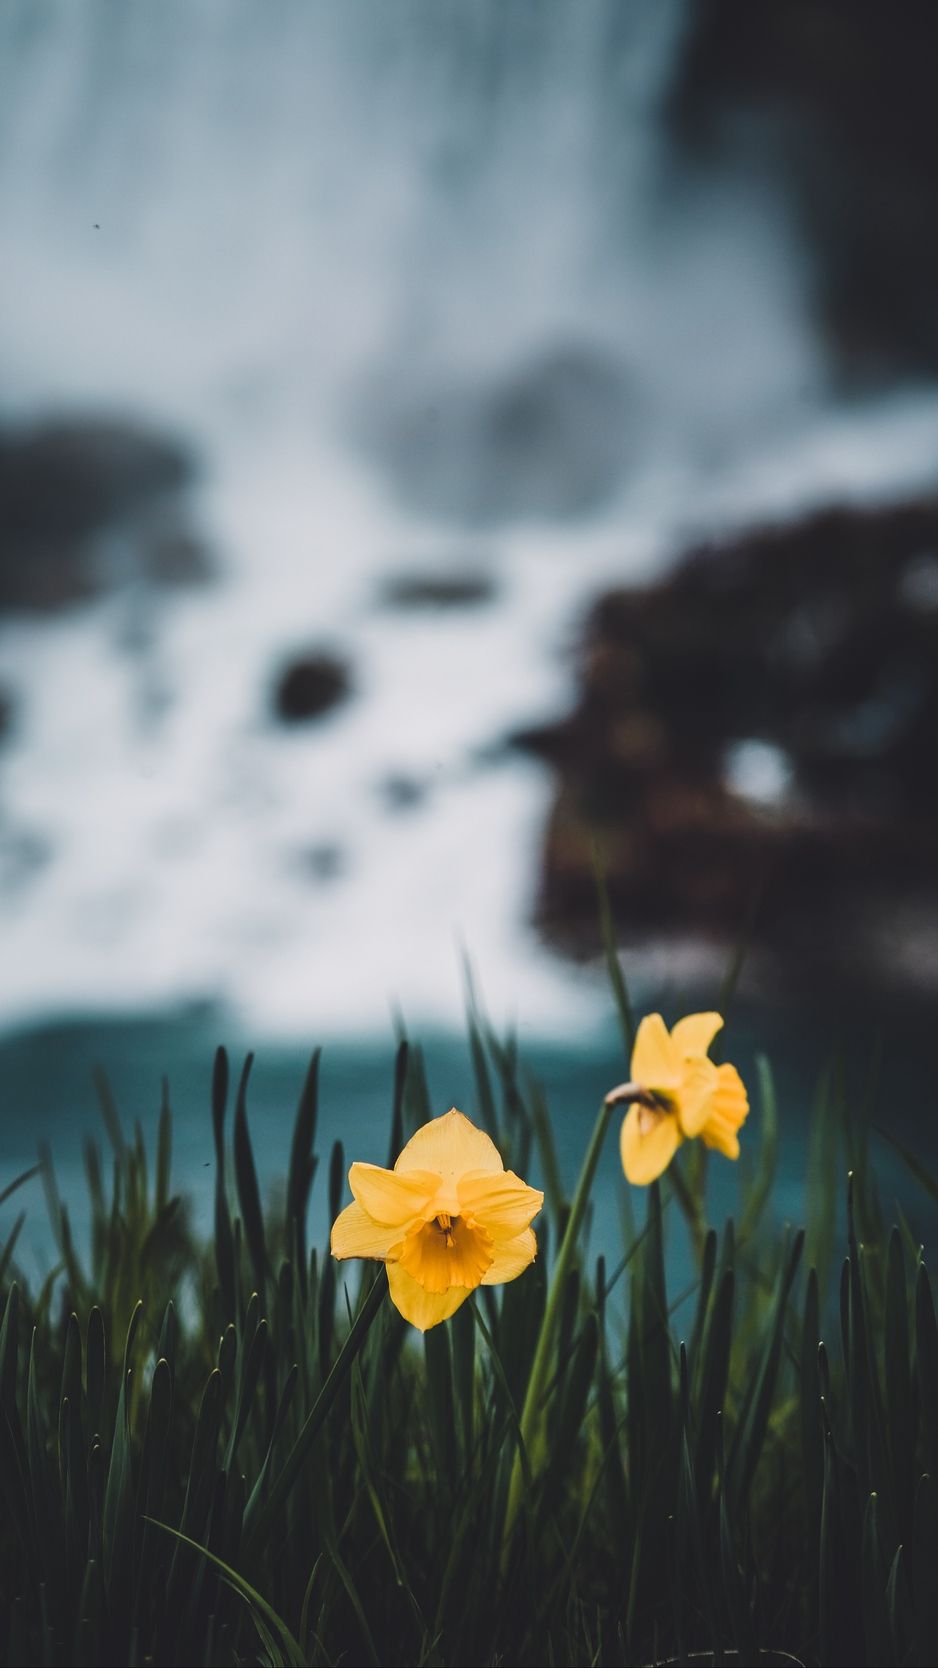 Download wallpaper 938x1668 daffodils, flowers, grass, blur iphone